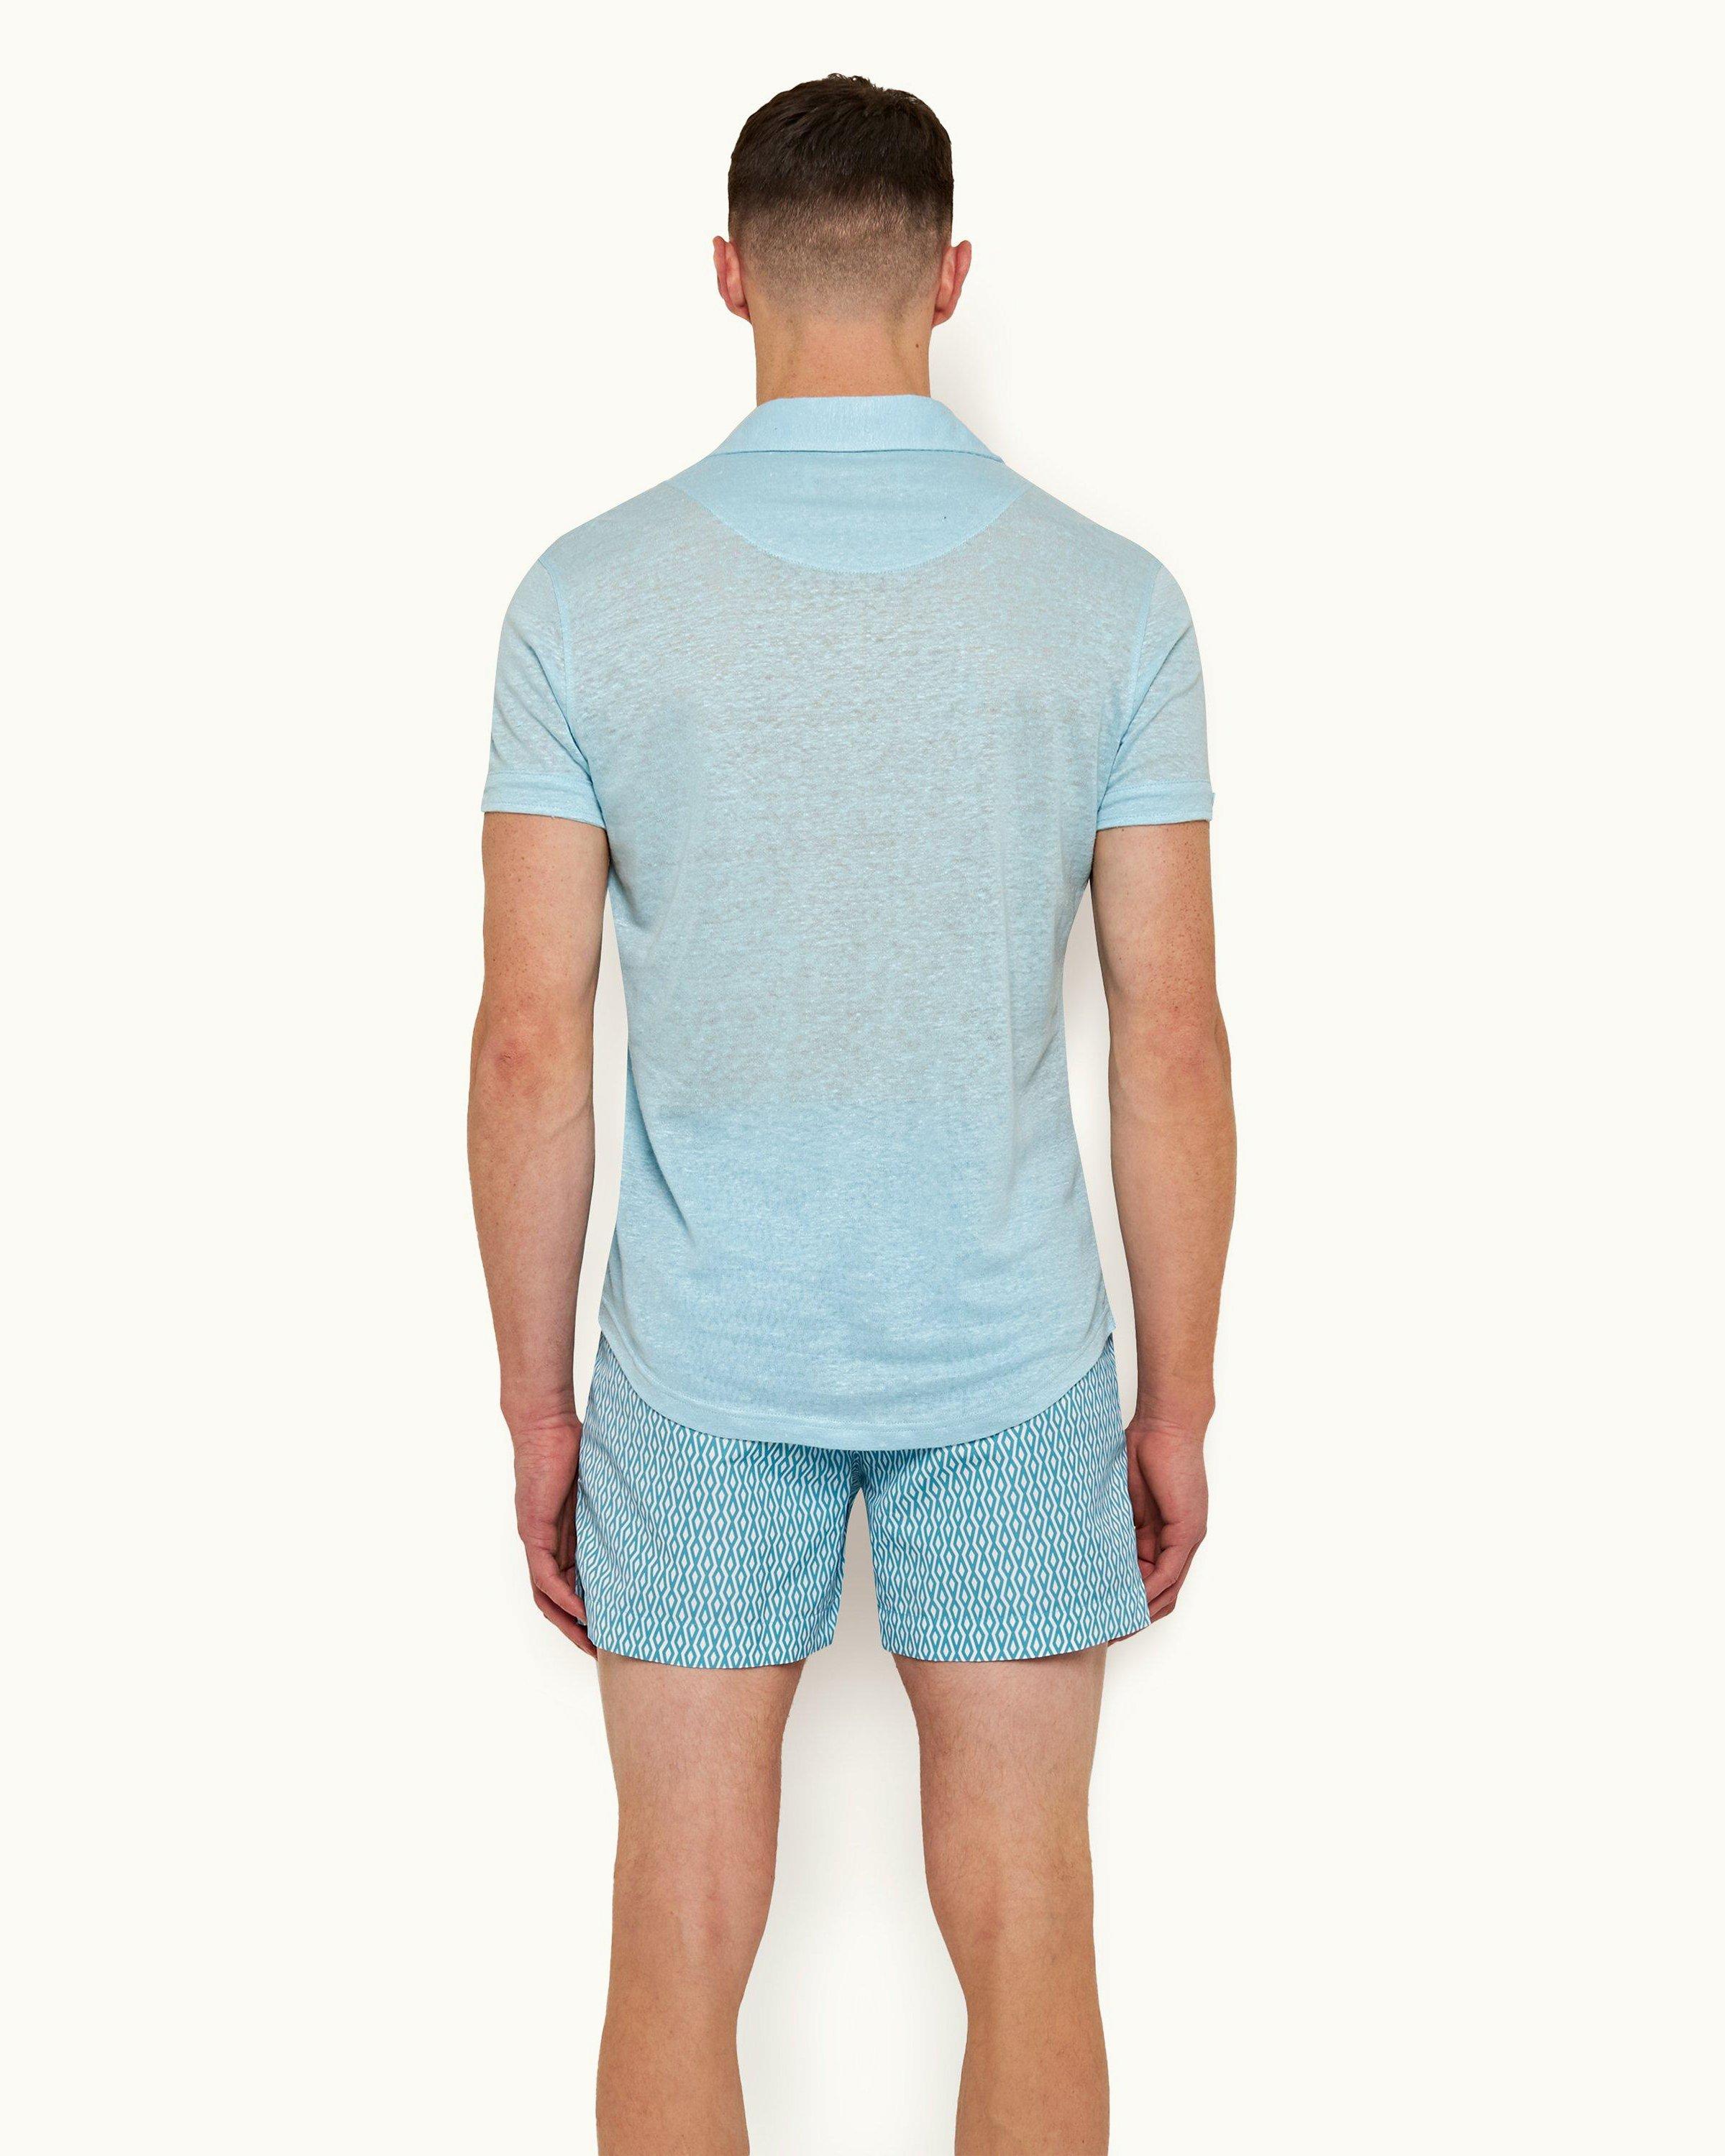 Light Blue Shirt with Brown Bermuda Shorts